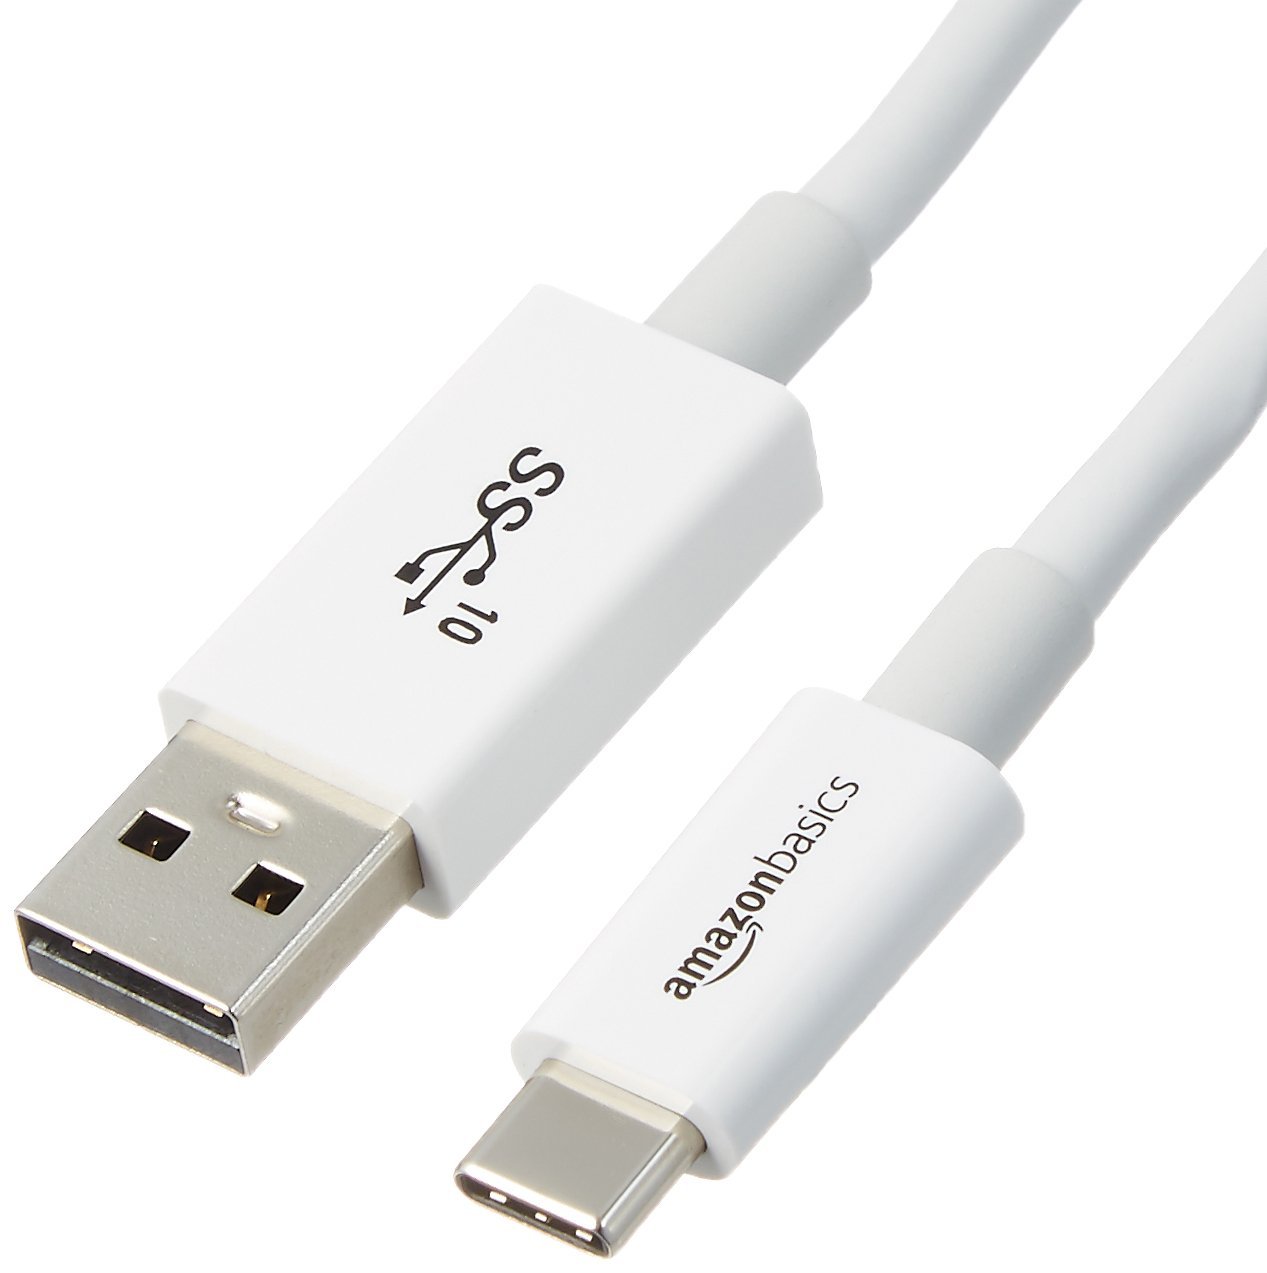 iPad Pro USB C Cable